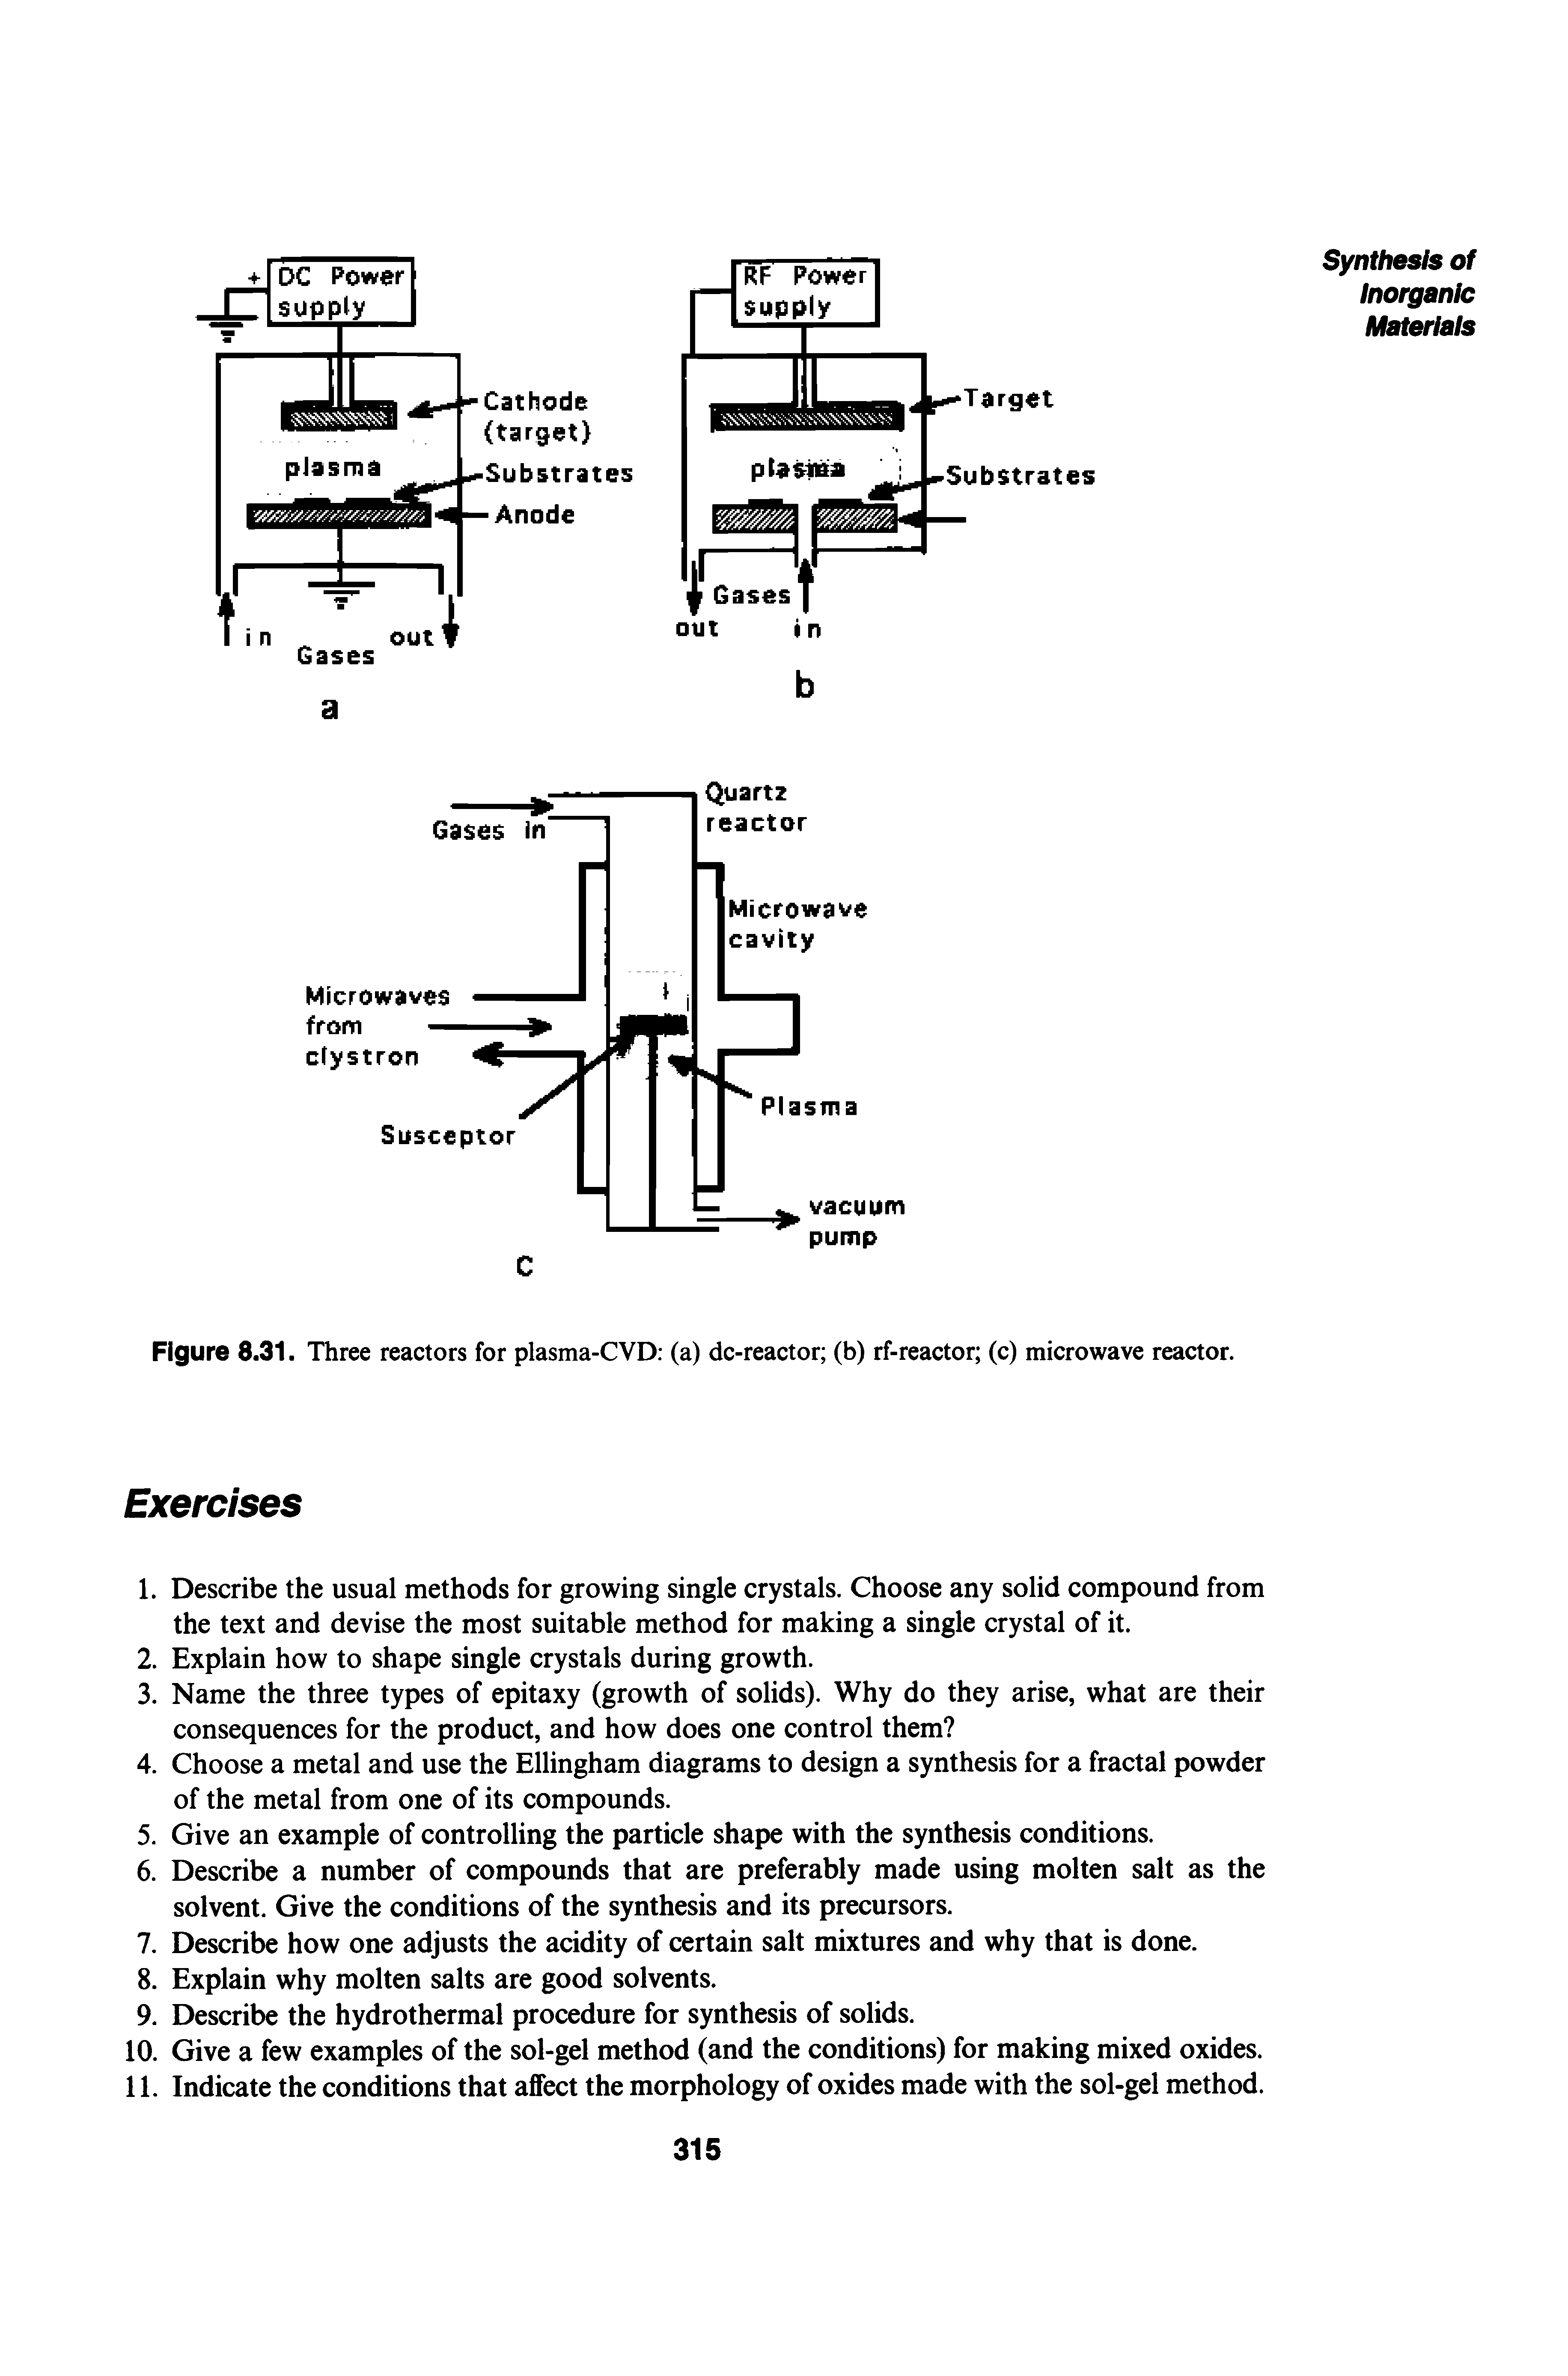 Figure 8.31. Three reactors for plasma-CVD (a) dc-reactor (b) rf-reactor (c) microwave reactor.